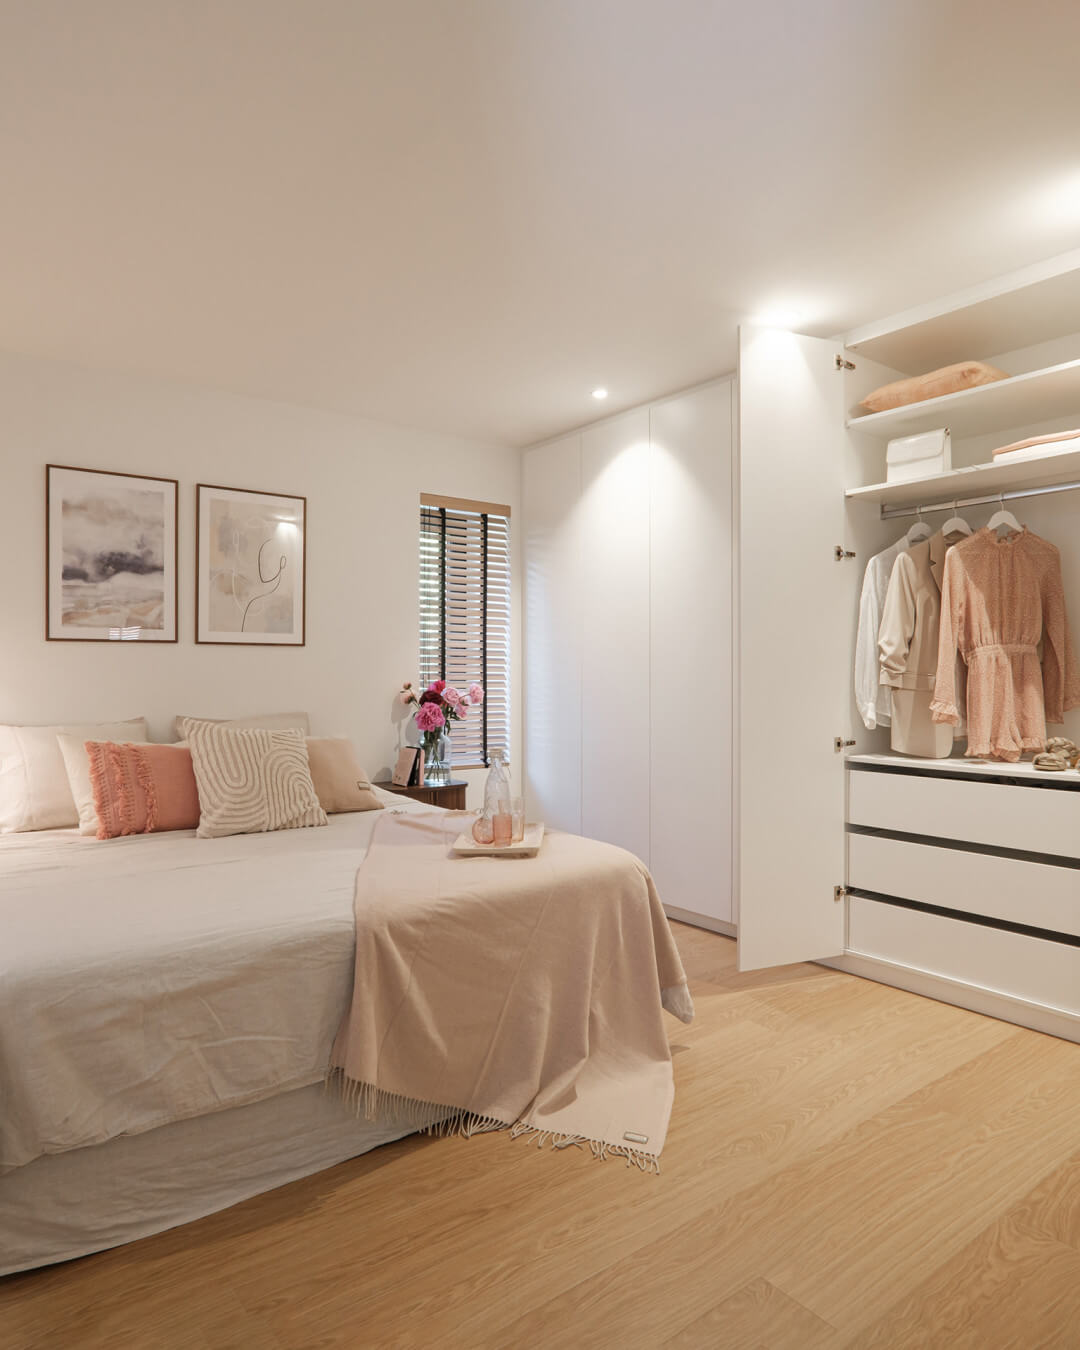 White custom-made closet between two walls from Maatkasten Online